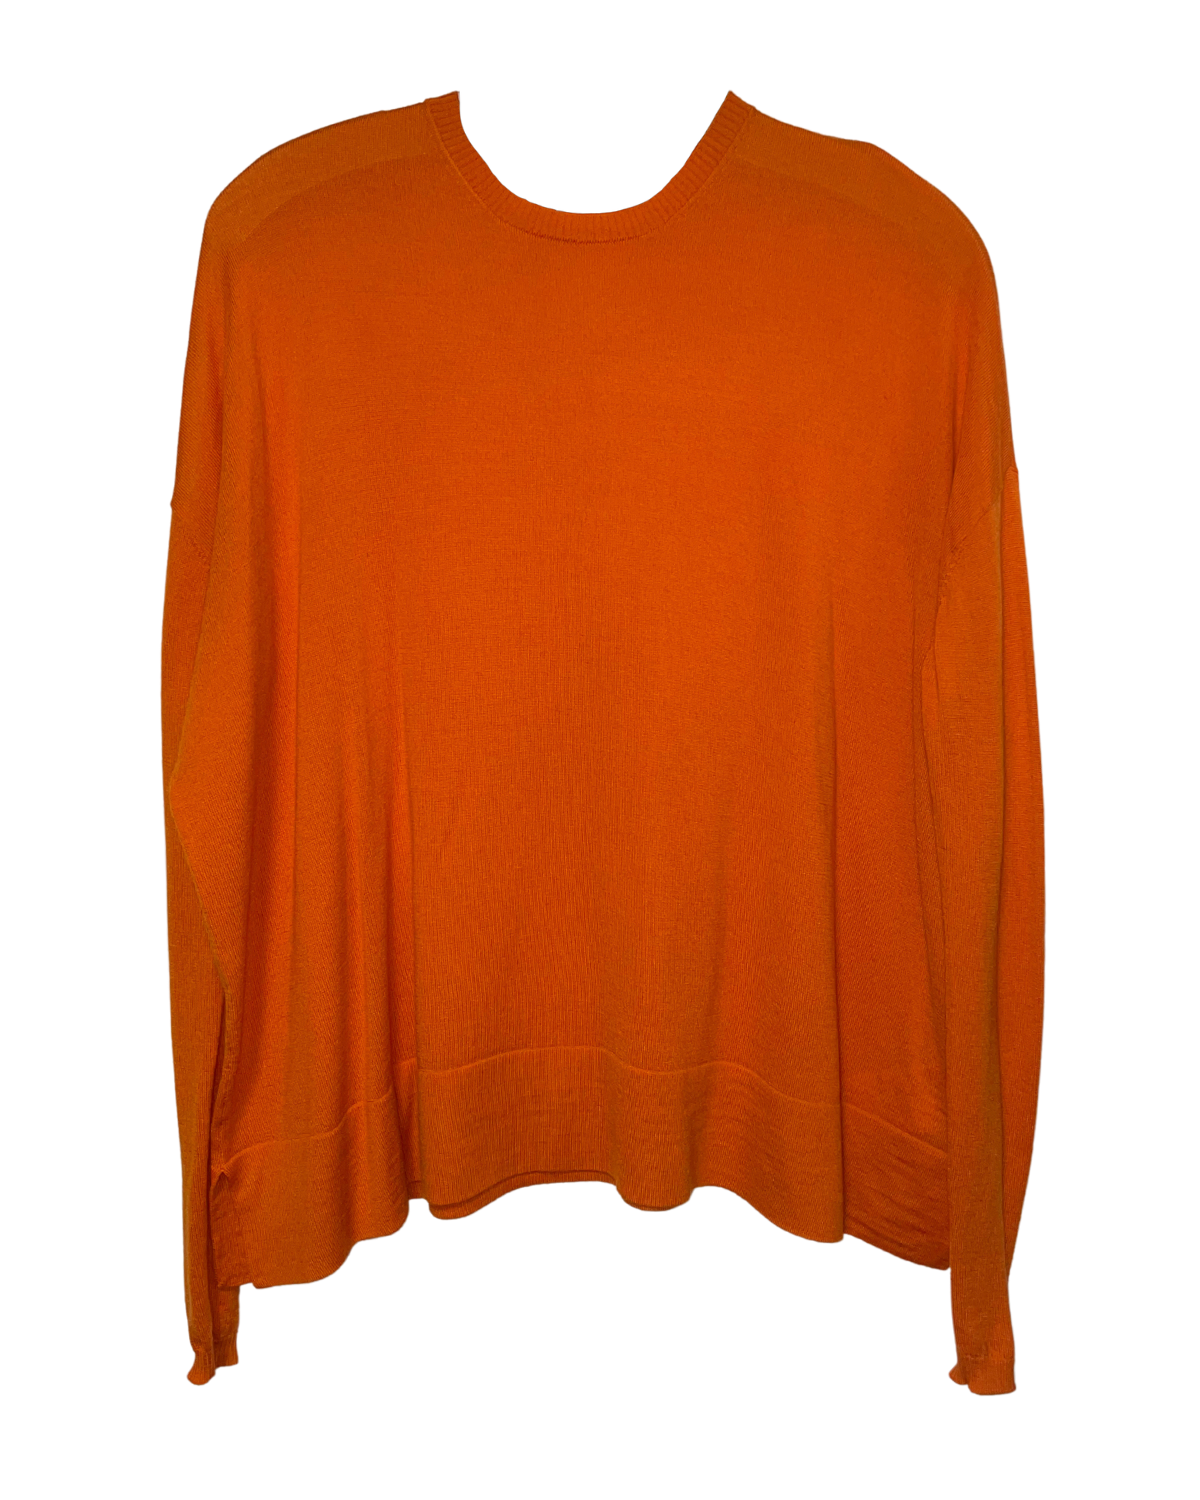 Cotton Oversized Crewneck Sweater (Orange)